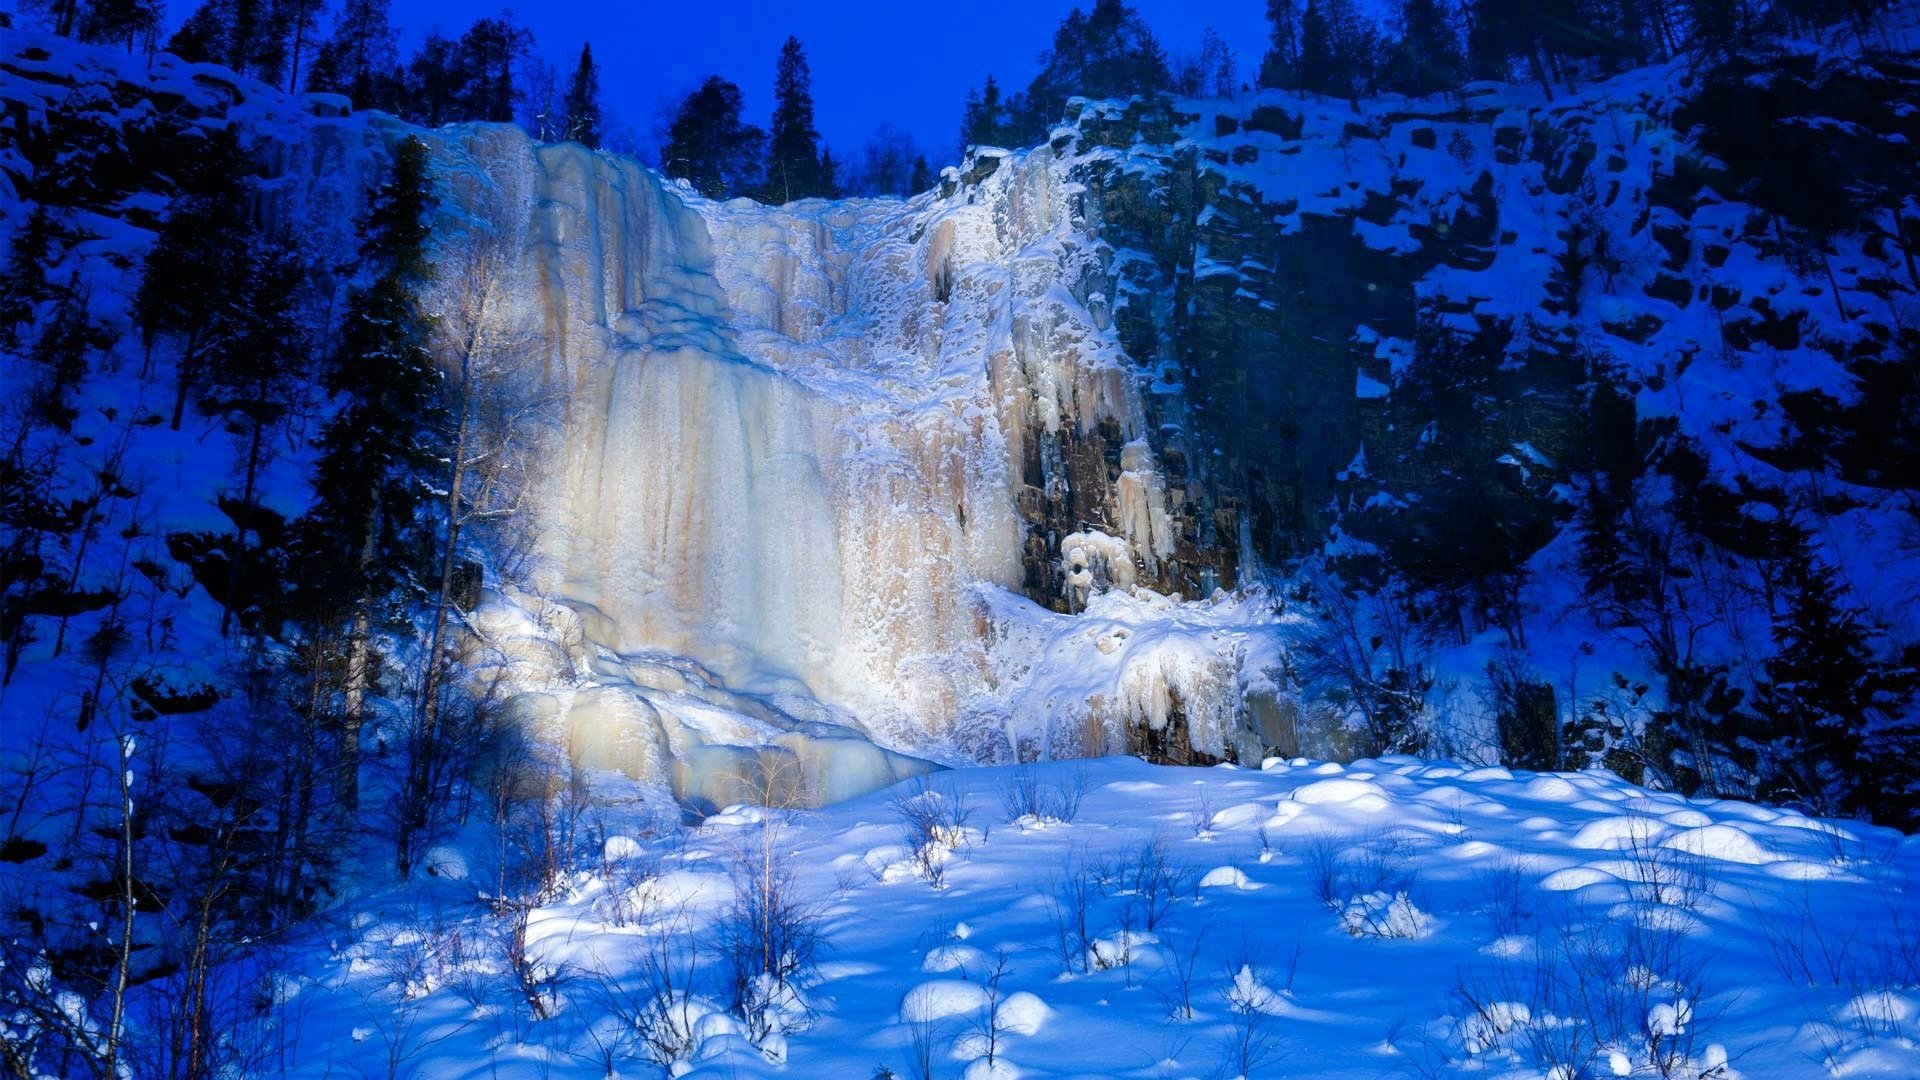 Wallpaper Korouoma, Finland, snow, waterfall, winter, ice 1920x1080 Full HD 2K Picture, Image